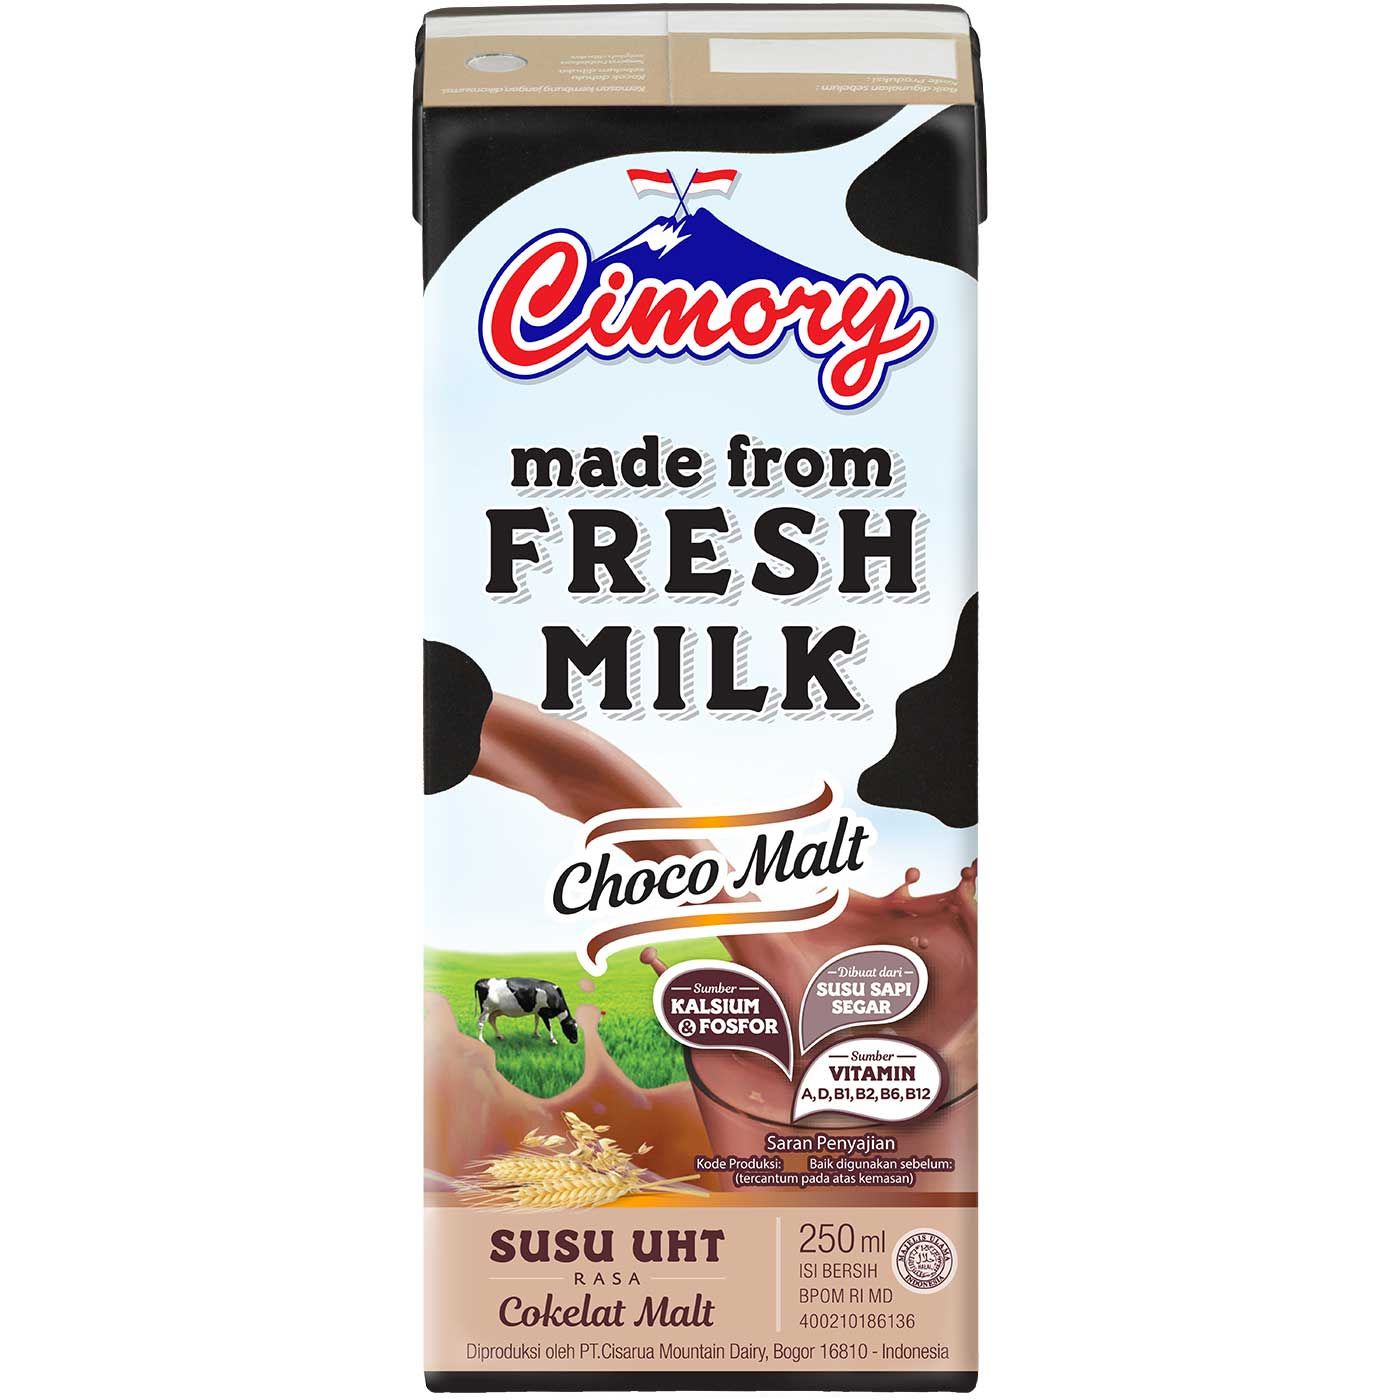 Cimory Uht Milk Choco Malt 250ml  - 1